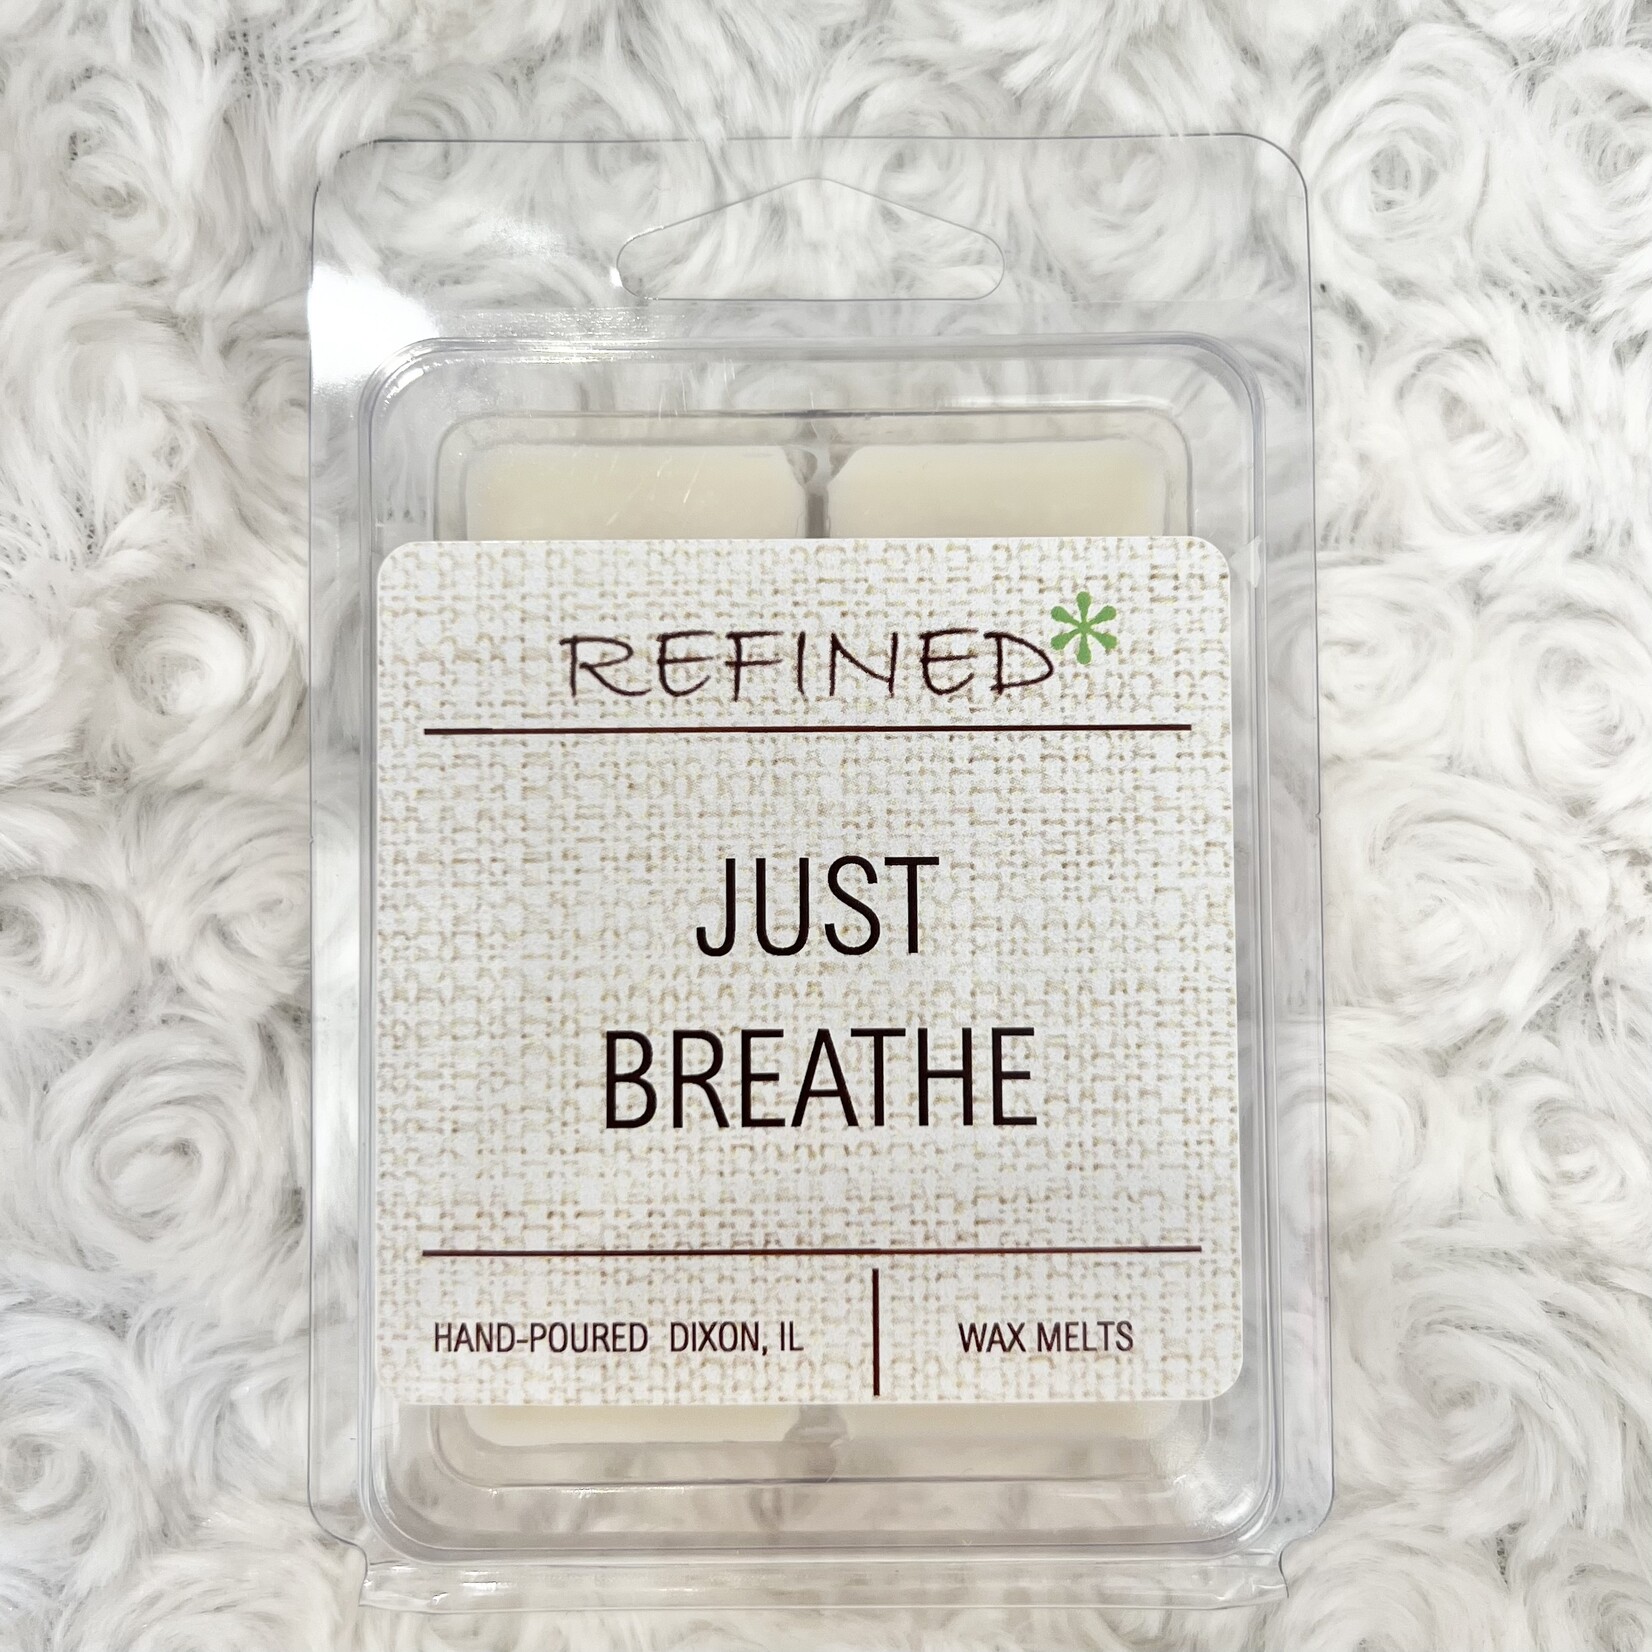 Just Breathe Wax Melt